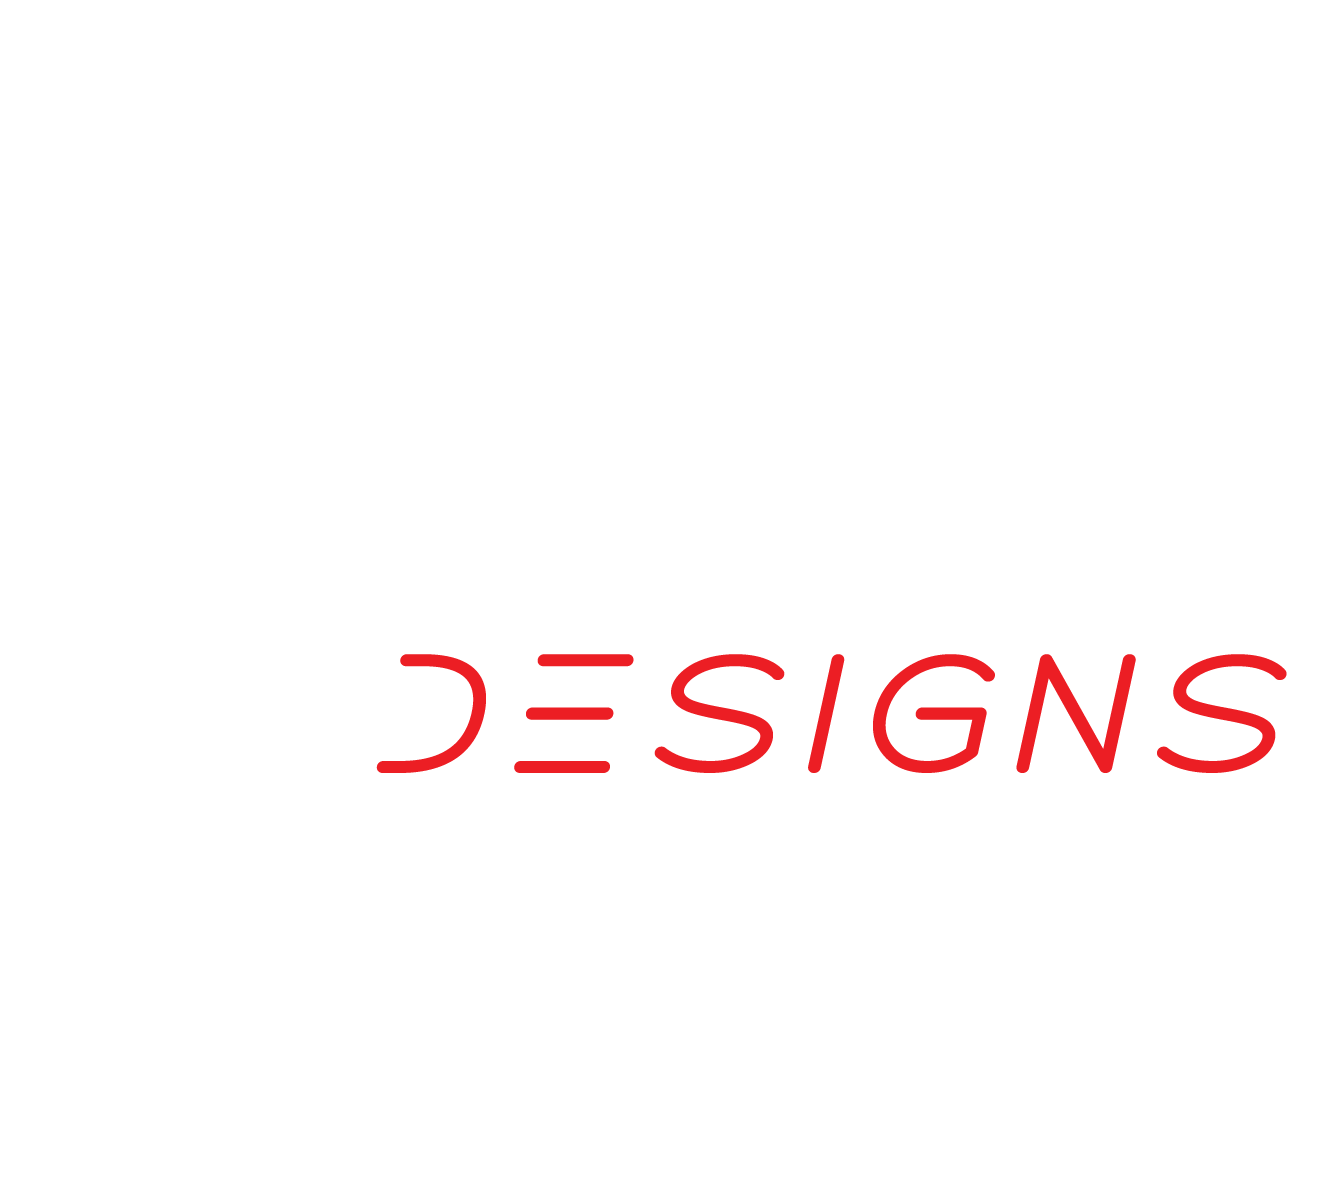 Hodge Designs